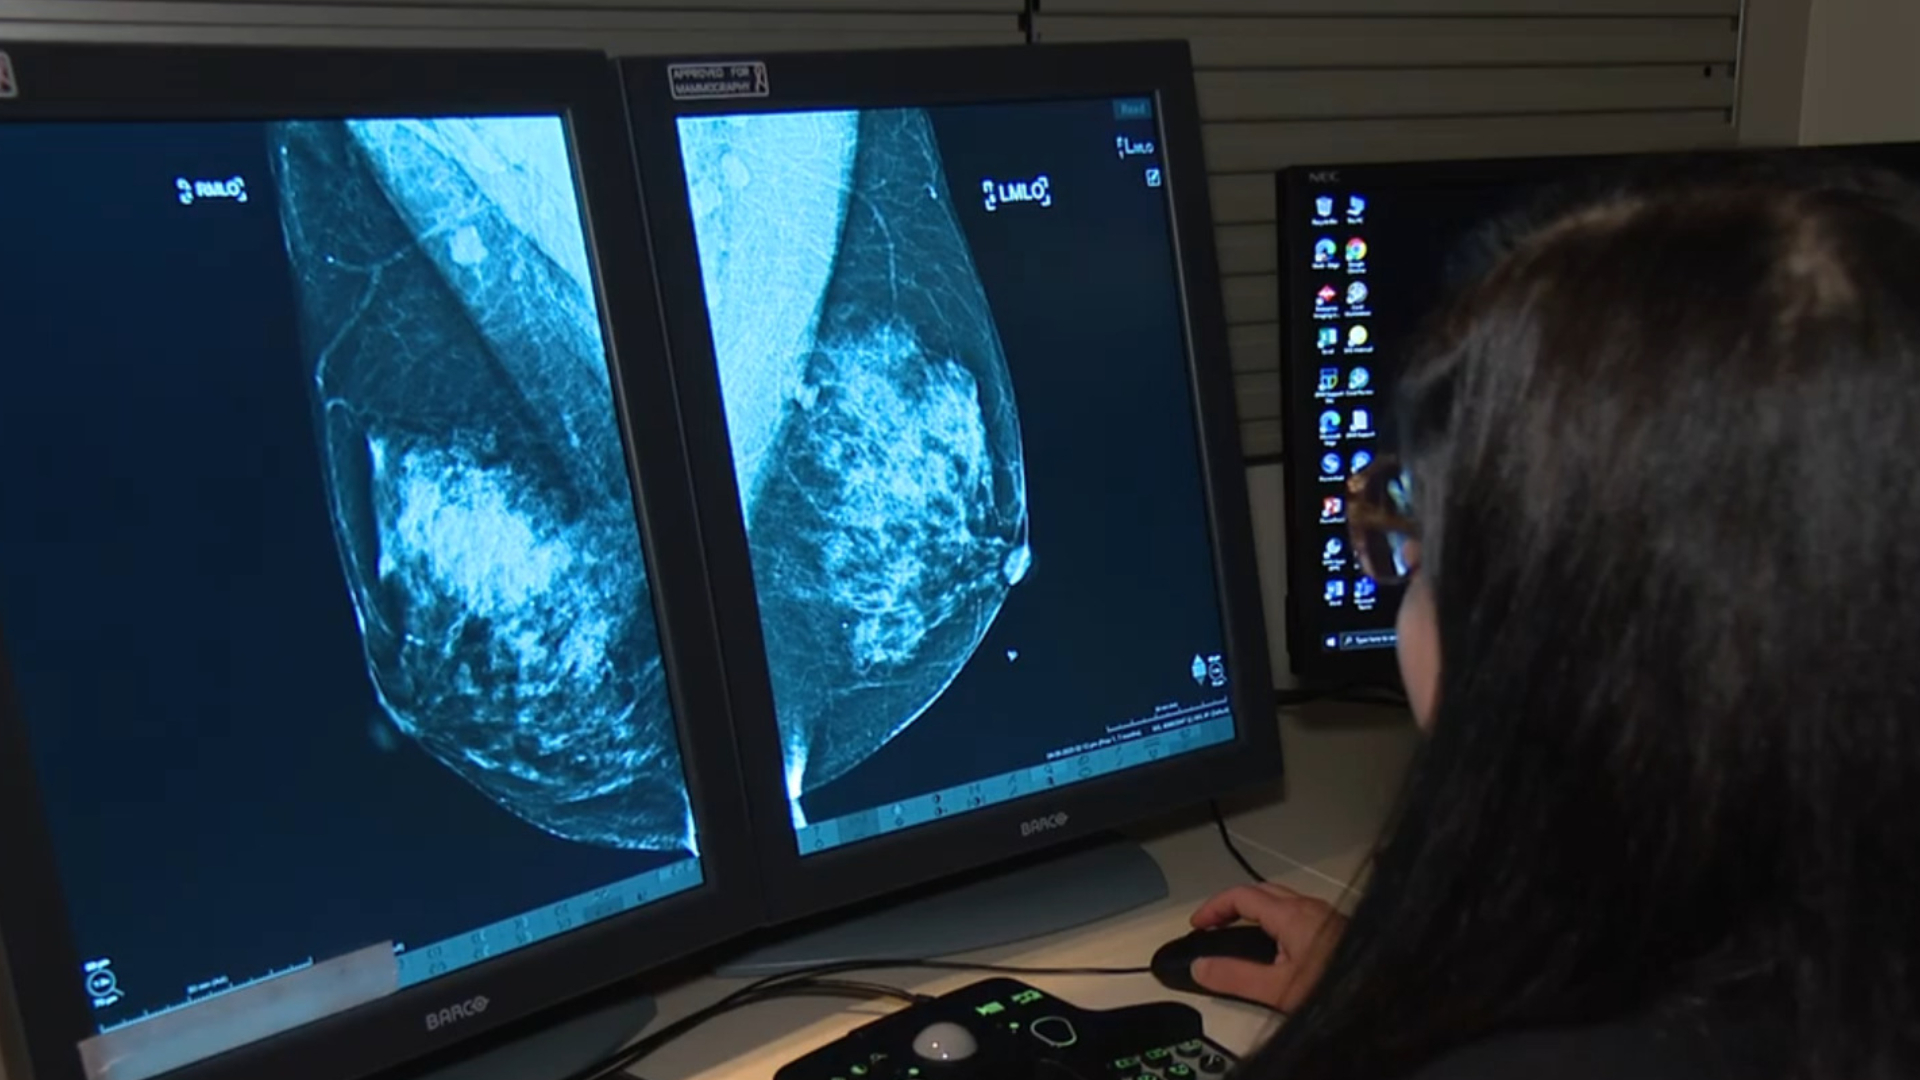 Benefits of earlier breast cancer screenings